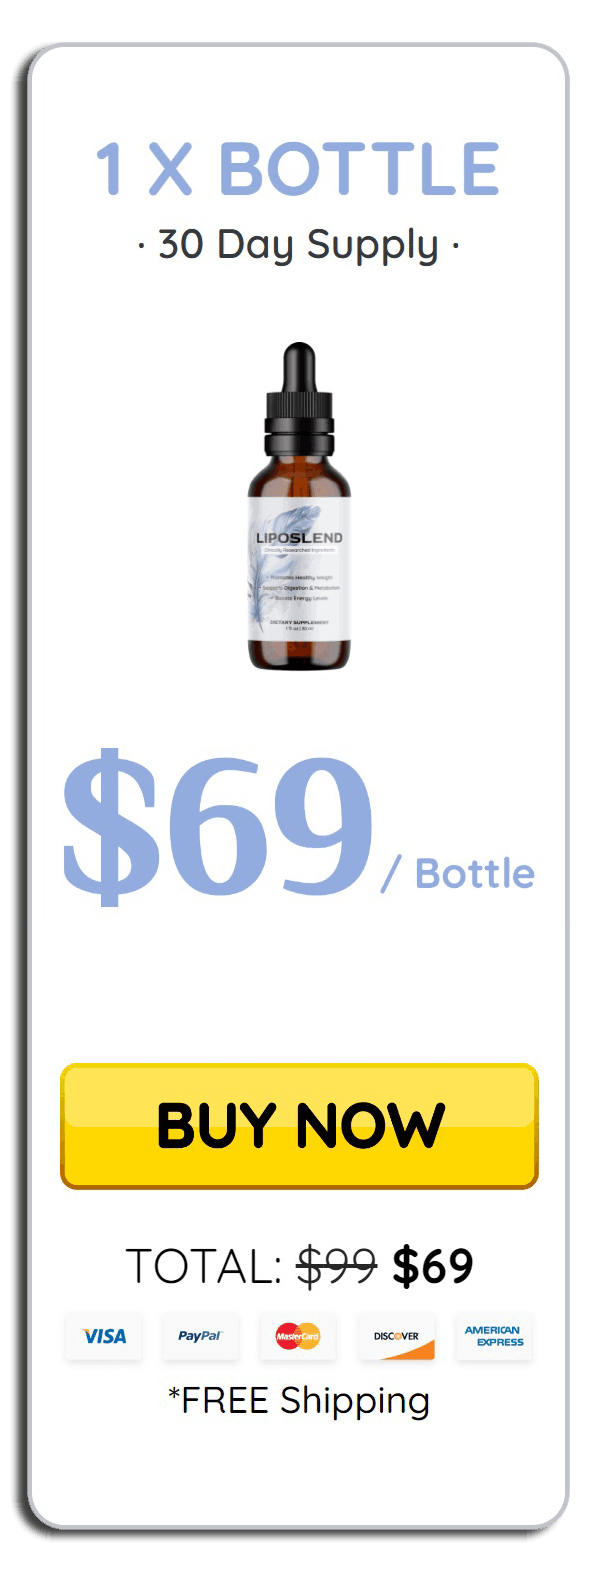 liposlend one bottle price 